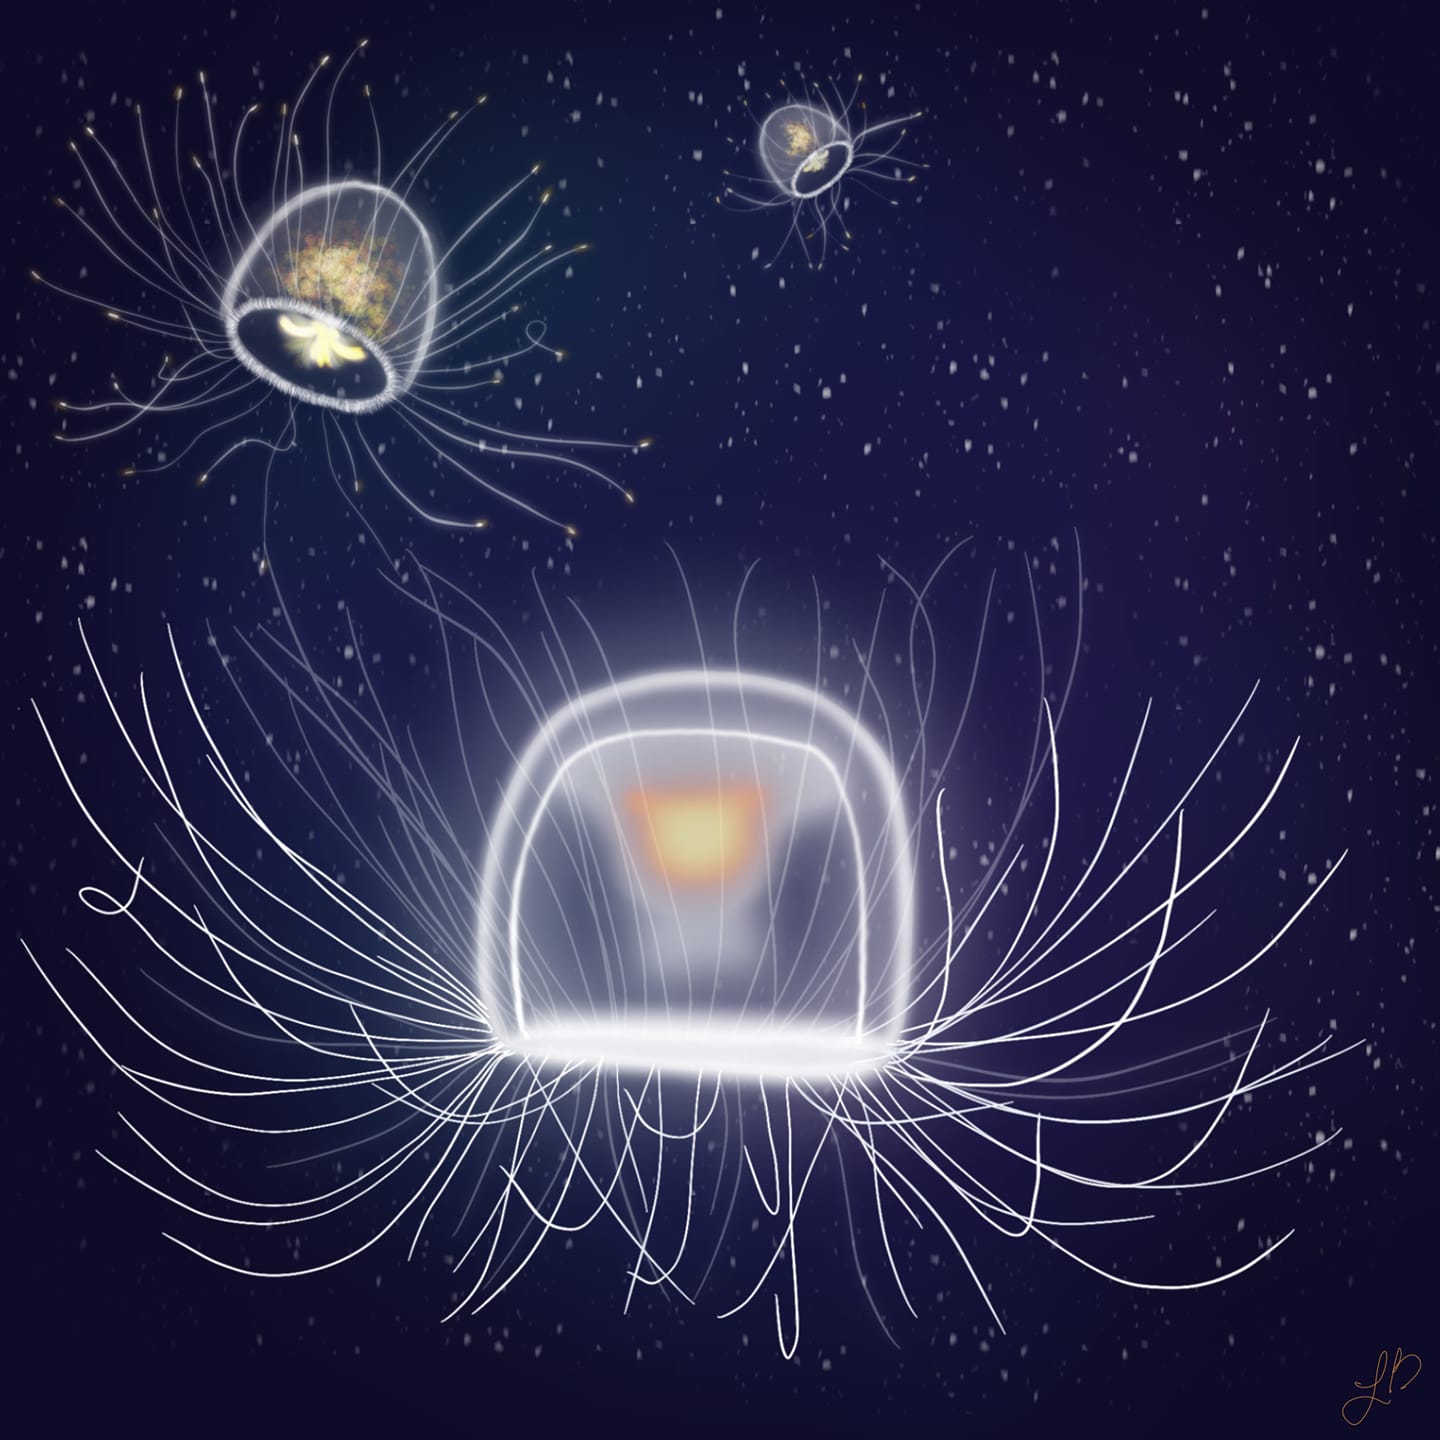 ocean twilight zone illustration of transparent jellyfish